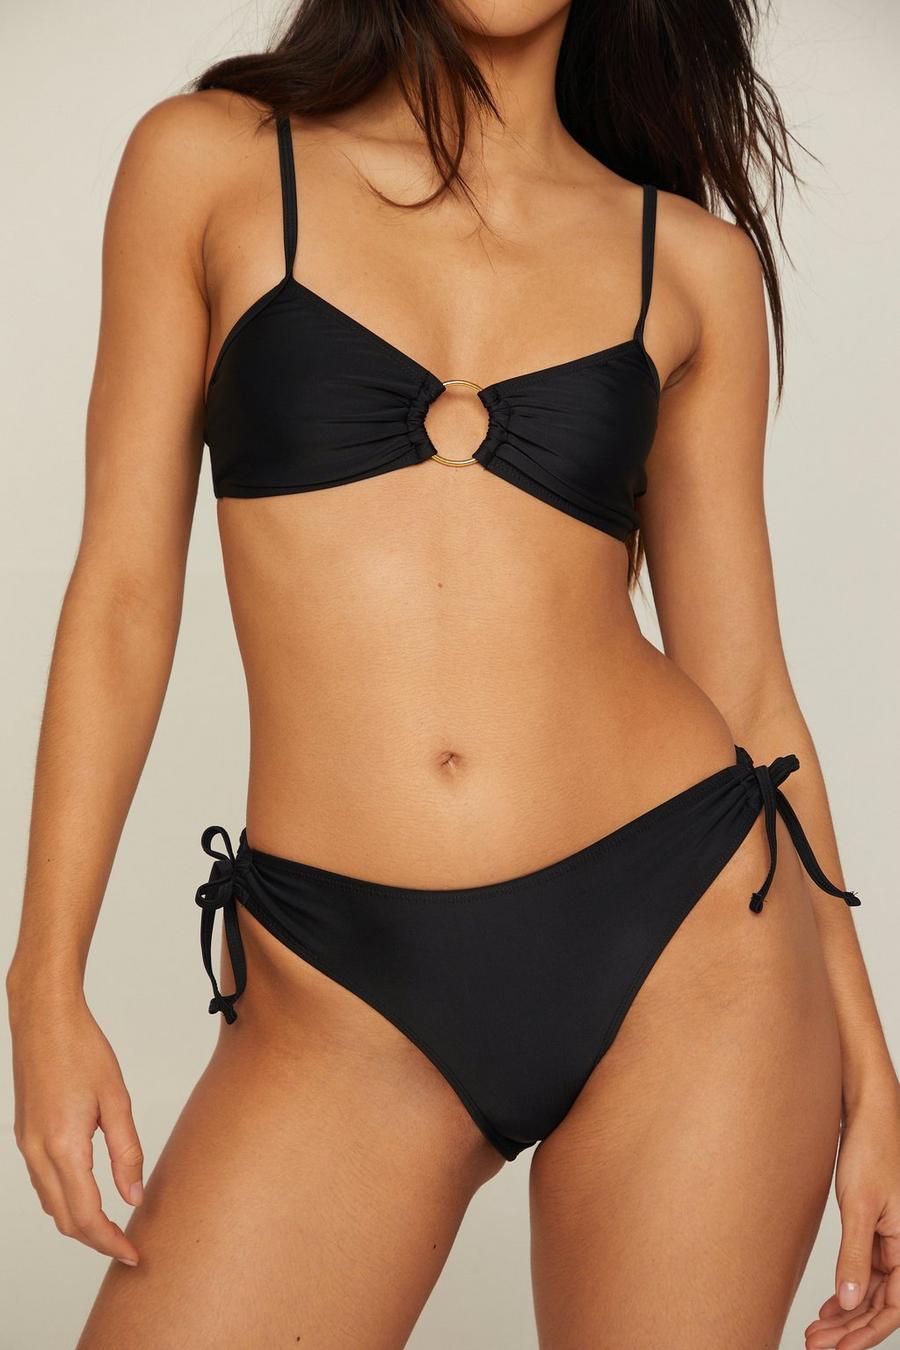 Larisalt High Waisted Bikini,Women Cutout Underboob Top with High Cut  Cheeky Bottom Bathing Suit Black,S 